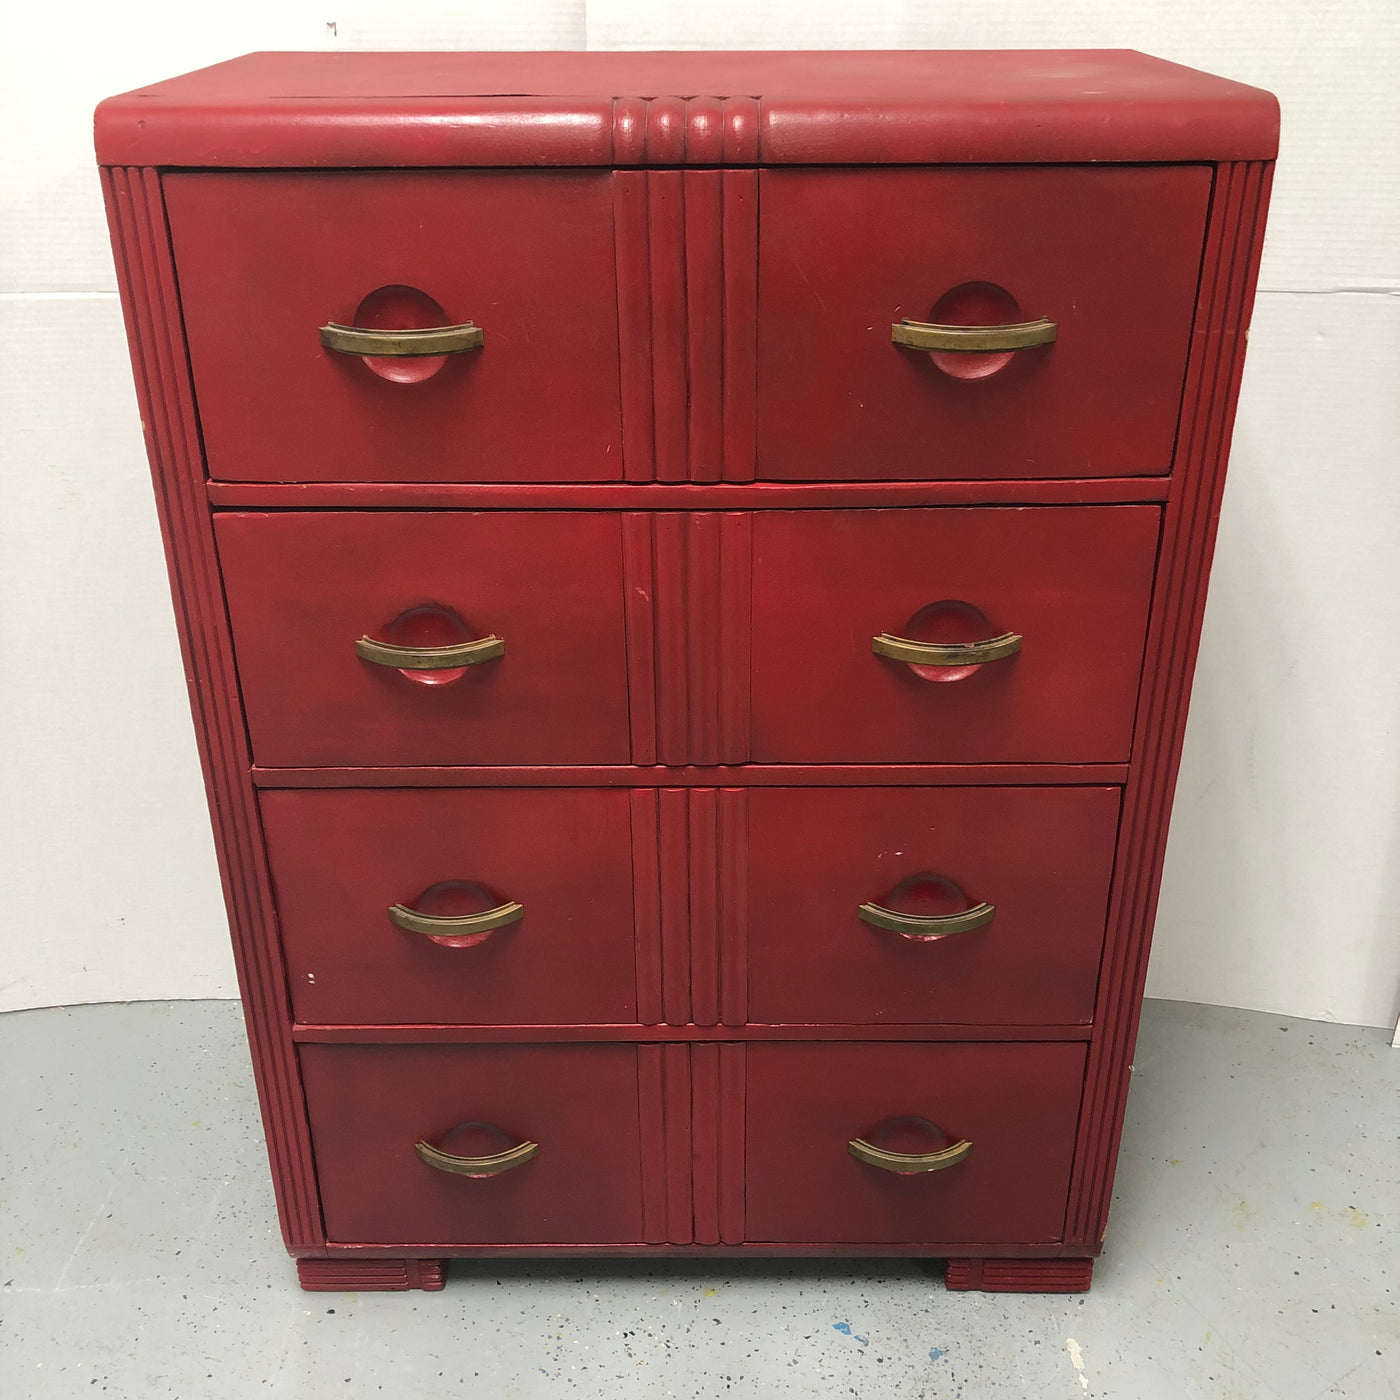 4 Drawer Tall Boy Red Wooden Oak Dresser Chest M15sales Com